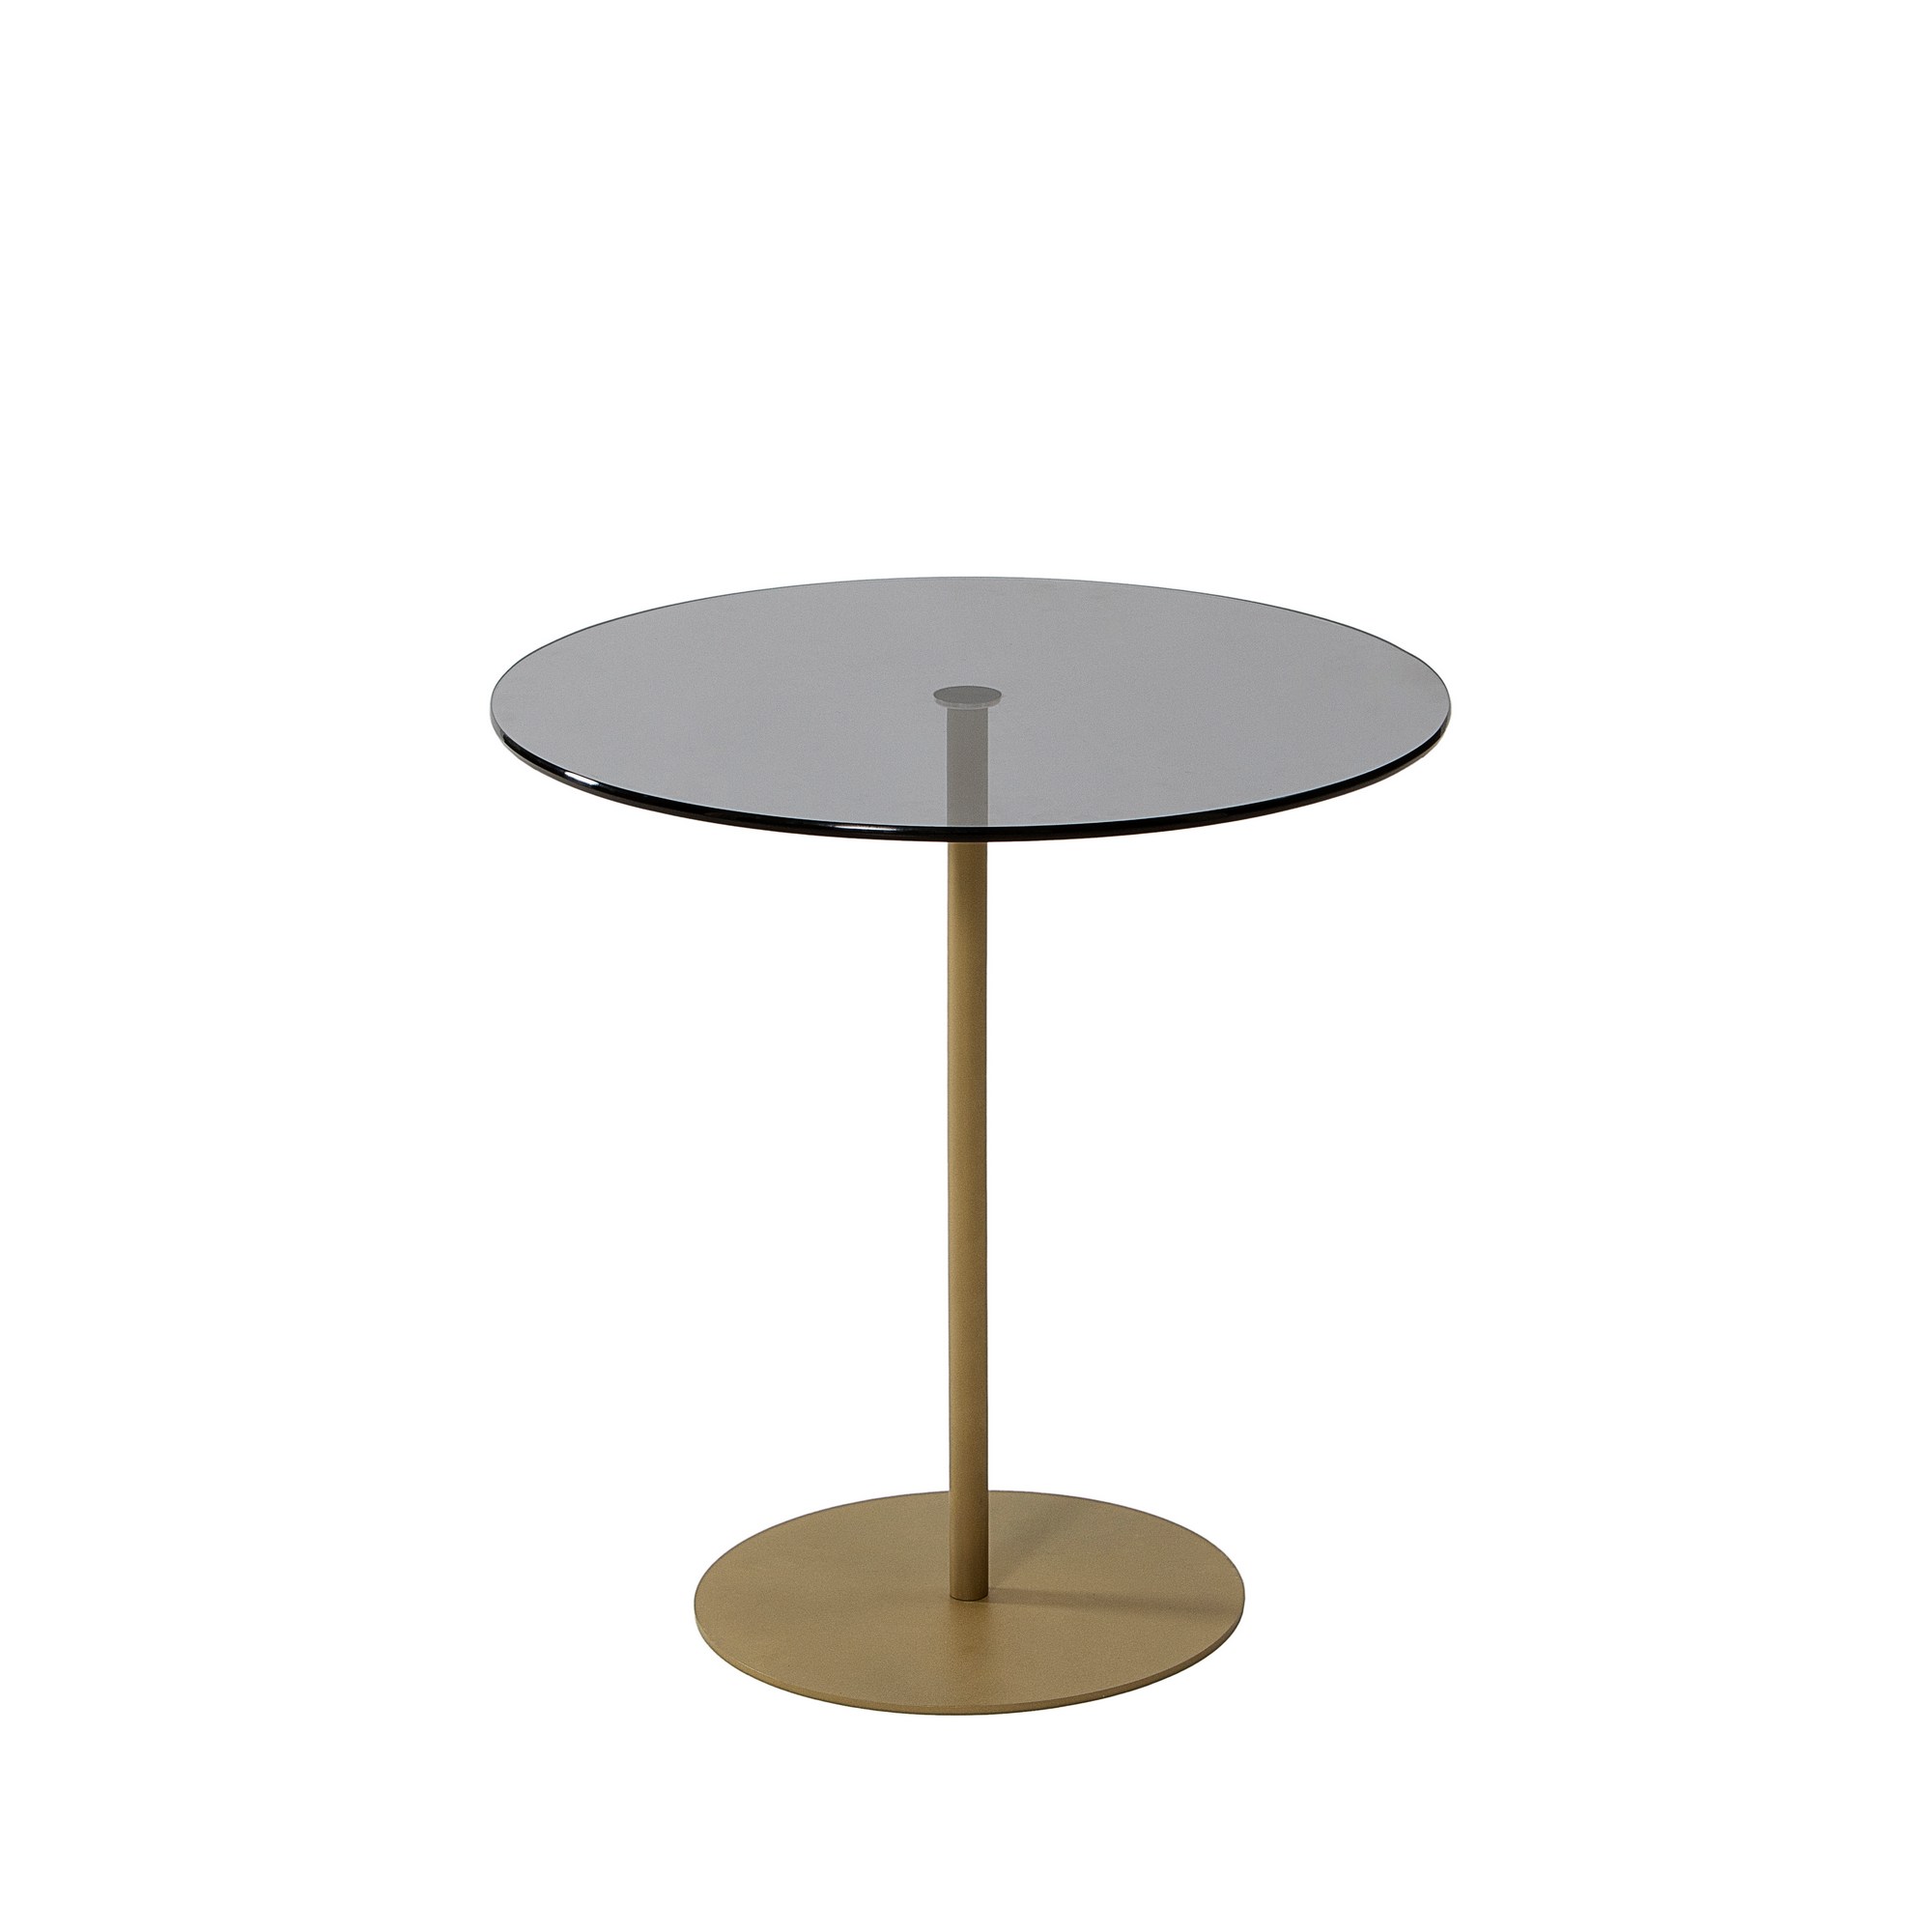 NORDVÄRK Chill sidebord, rund - mørkegrå glas og guld metal (Ø50)